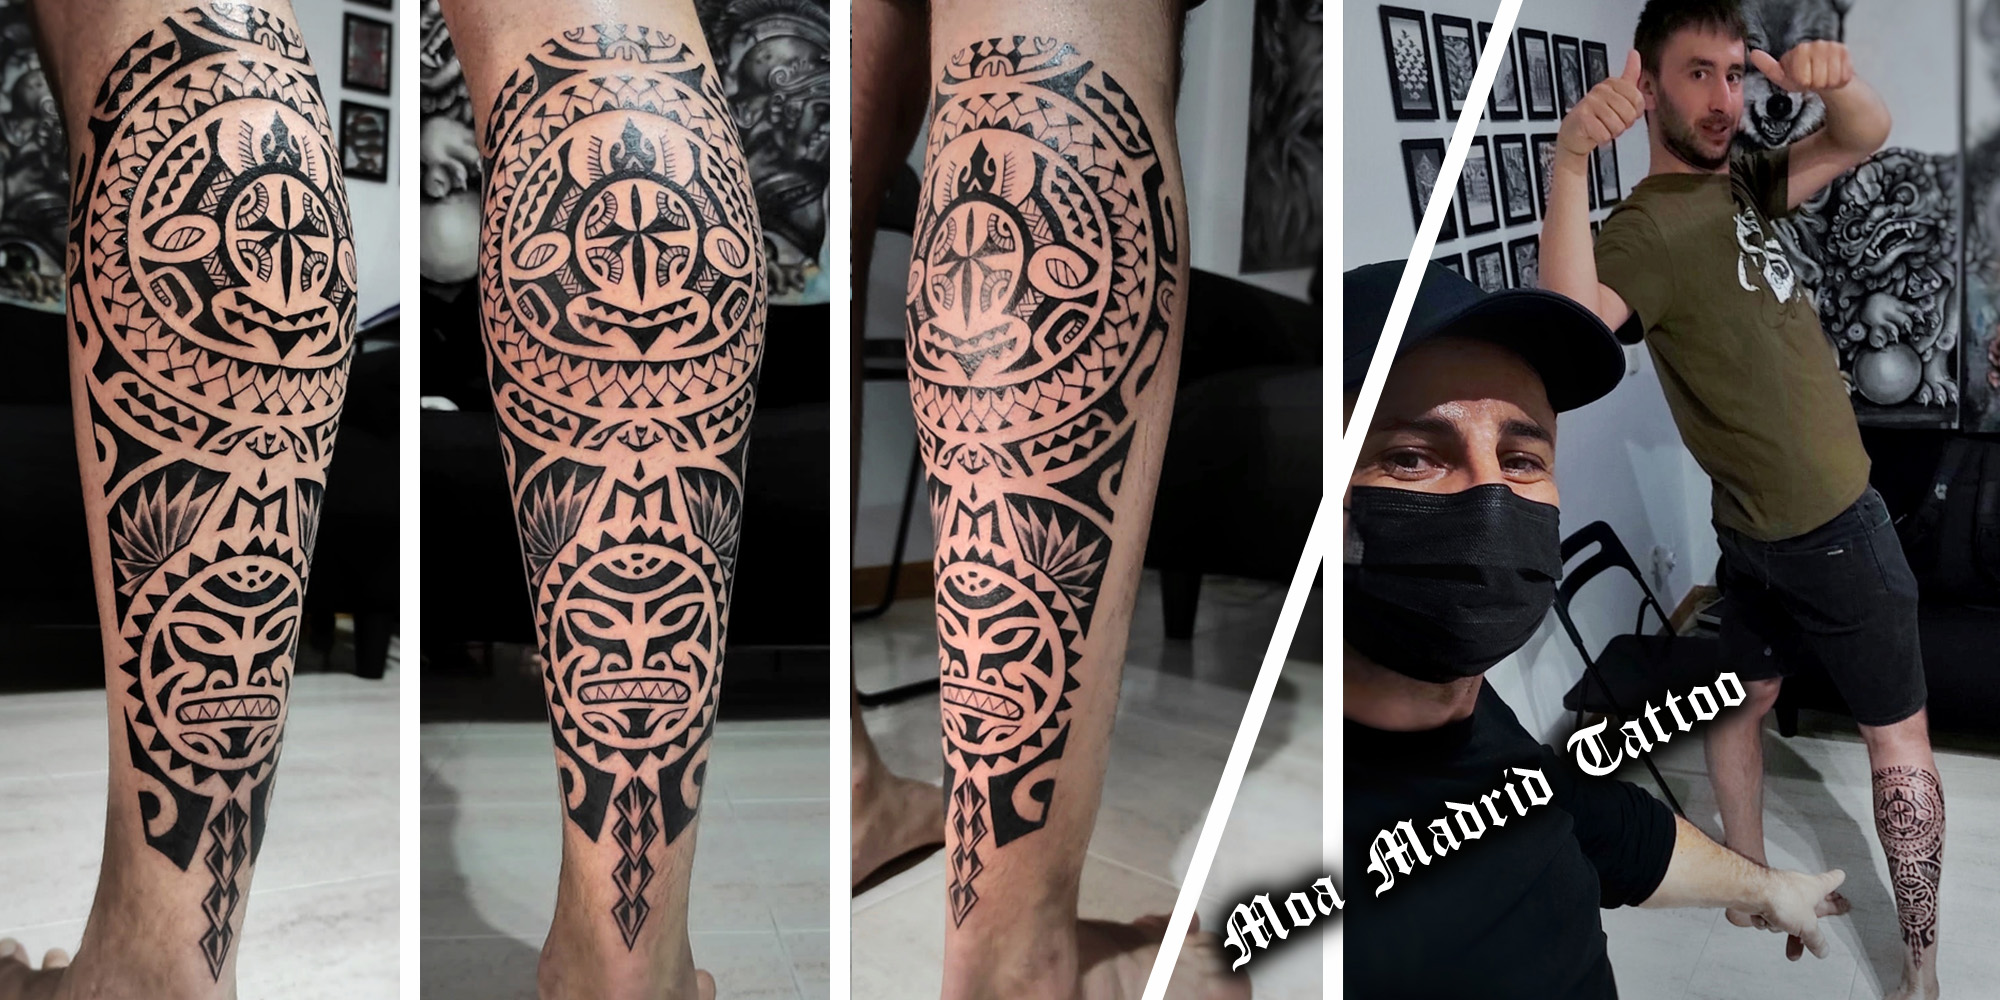 Tatuaje maorí realizado para cliente de Euskadi creado por tatuador maorí en Madrid